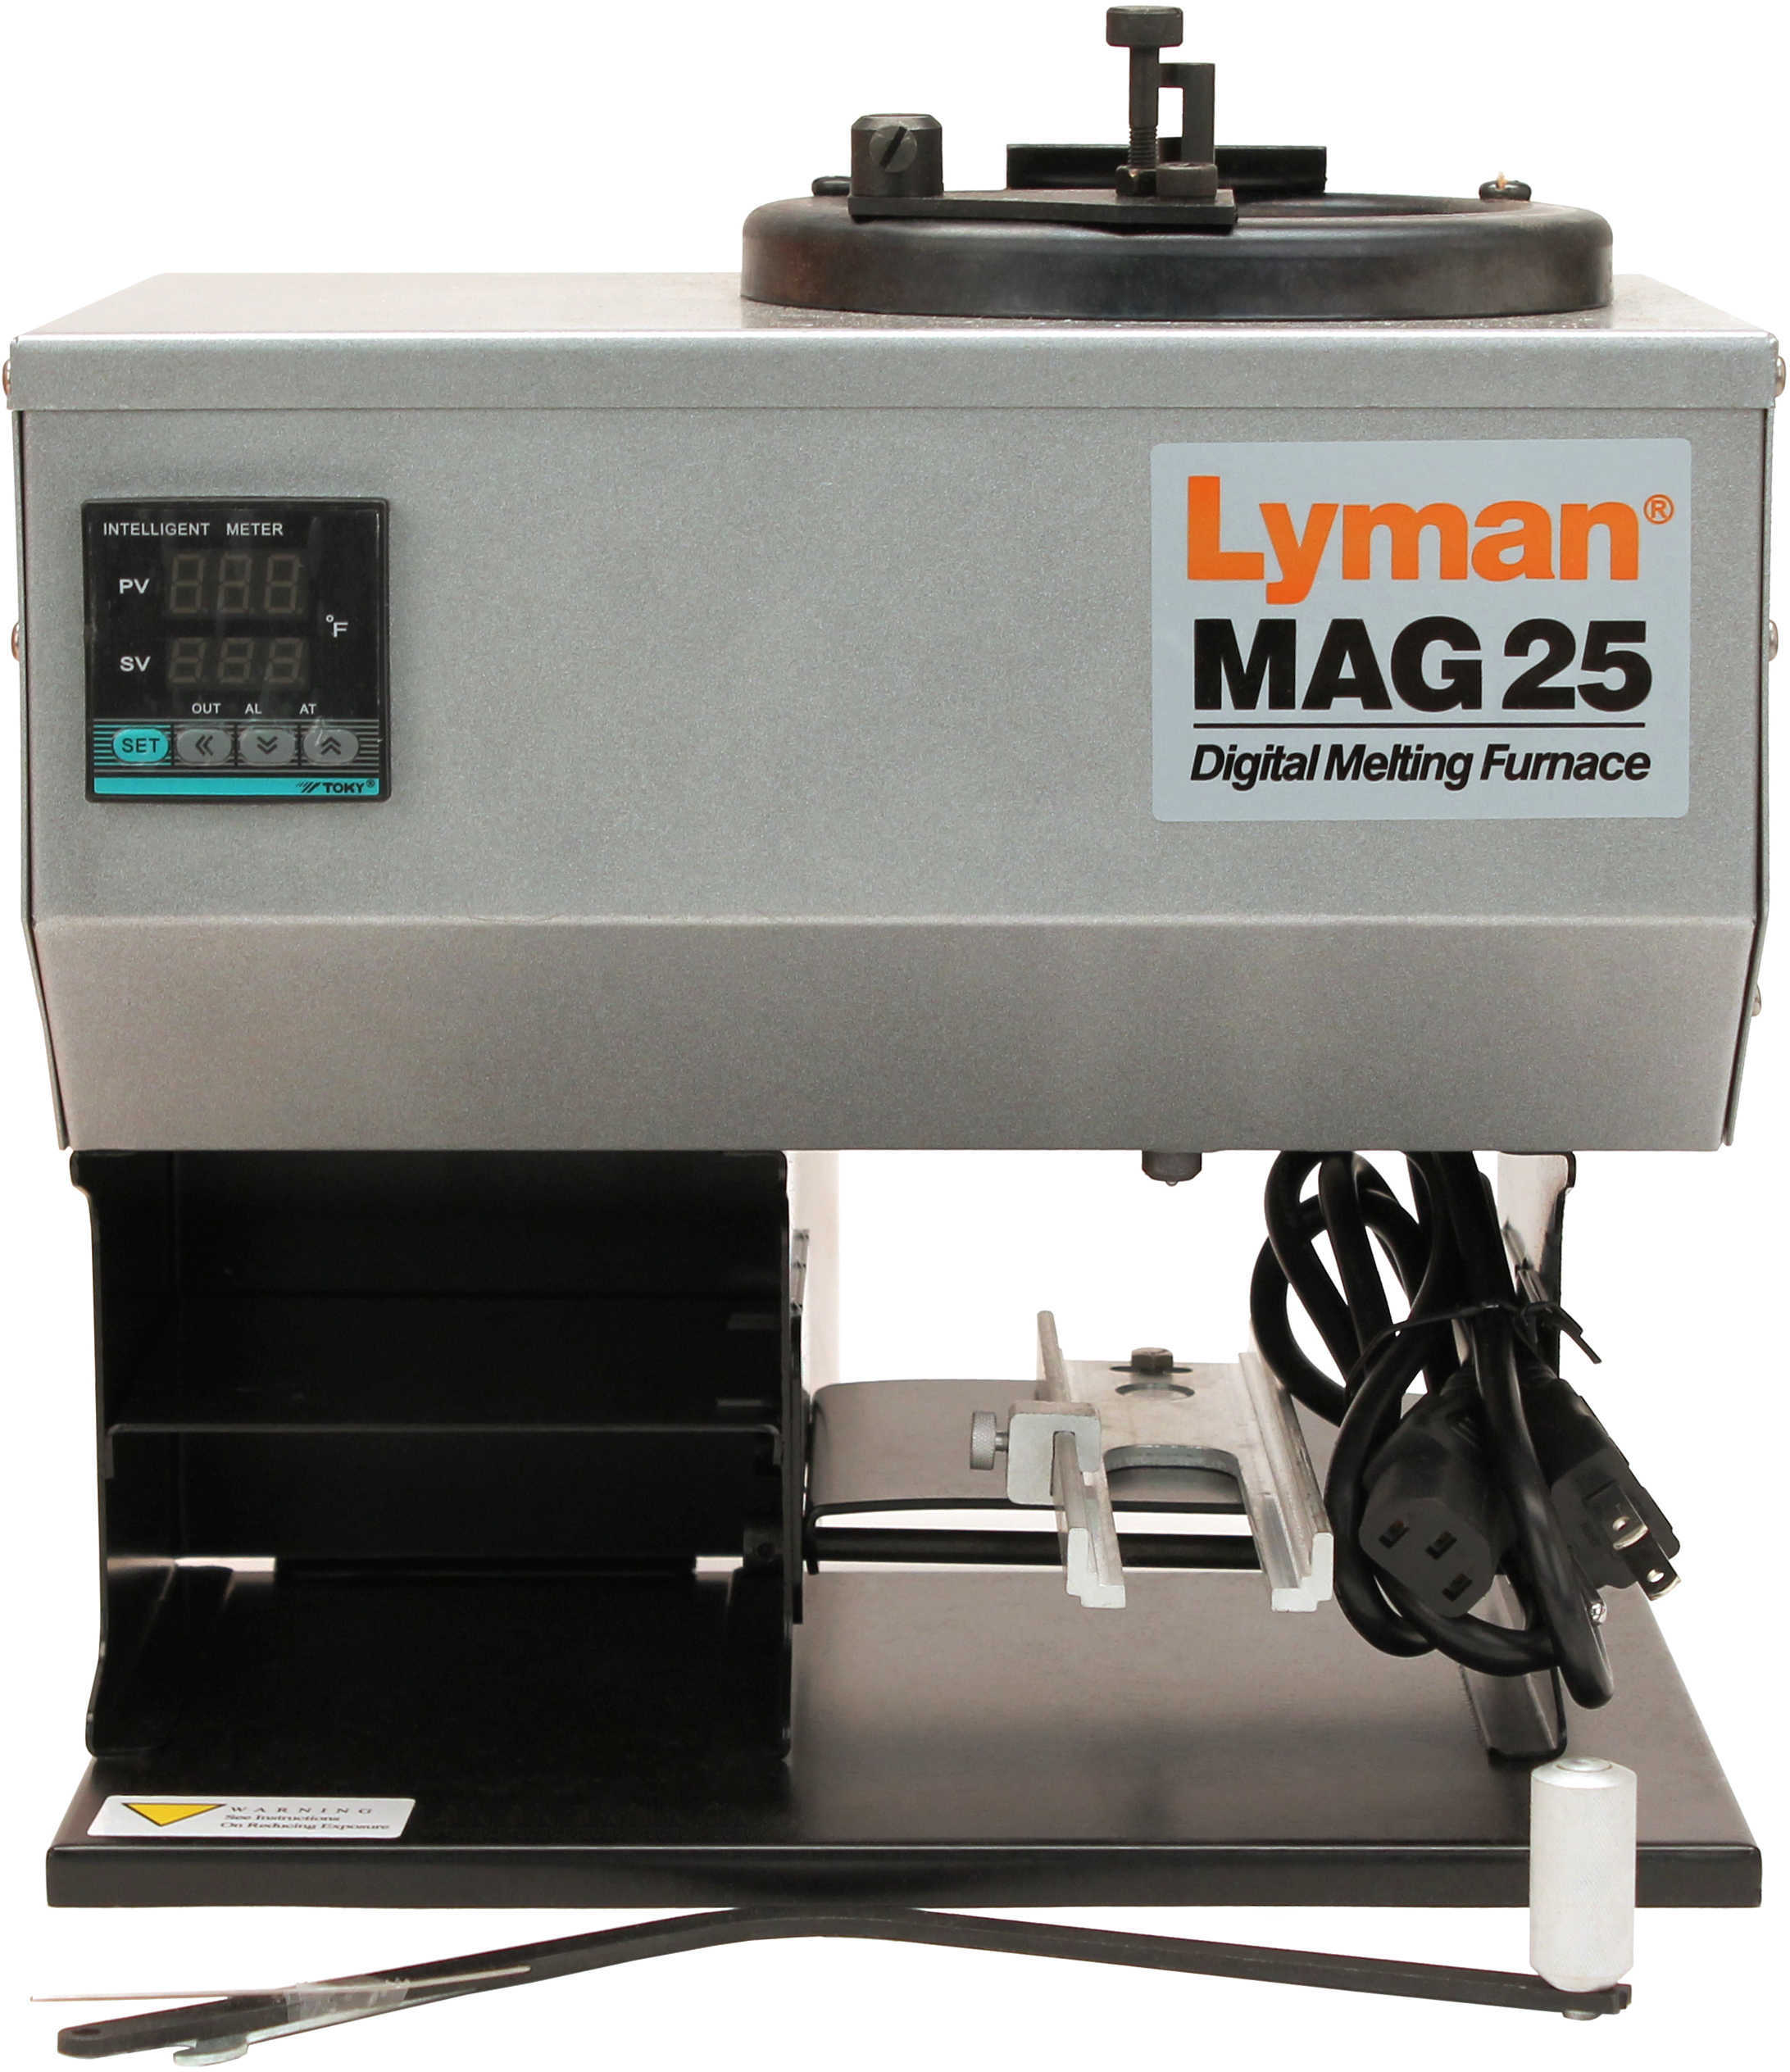 Lyman Mag 25 Digital Melting Furnace (115V) 2800382